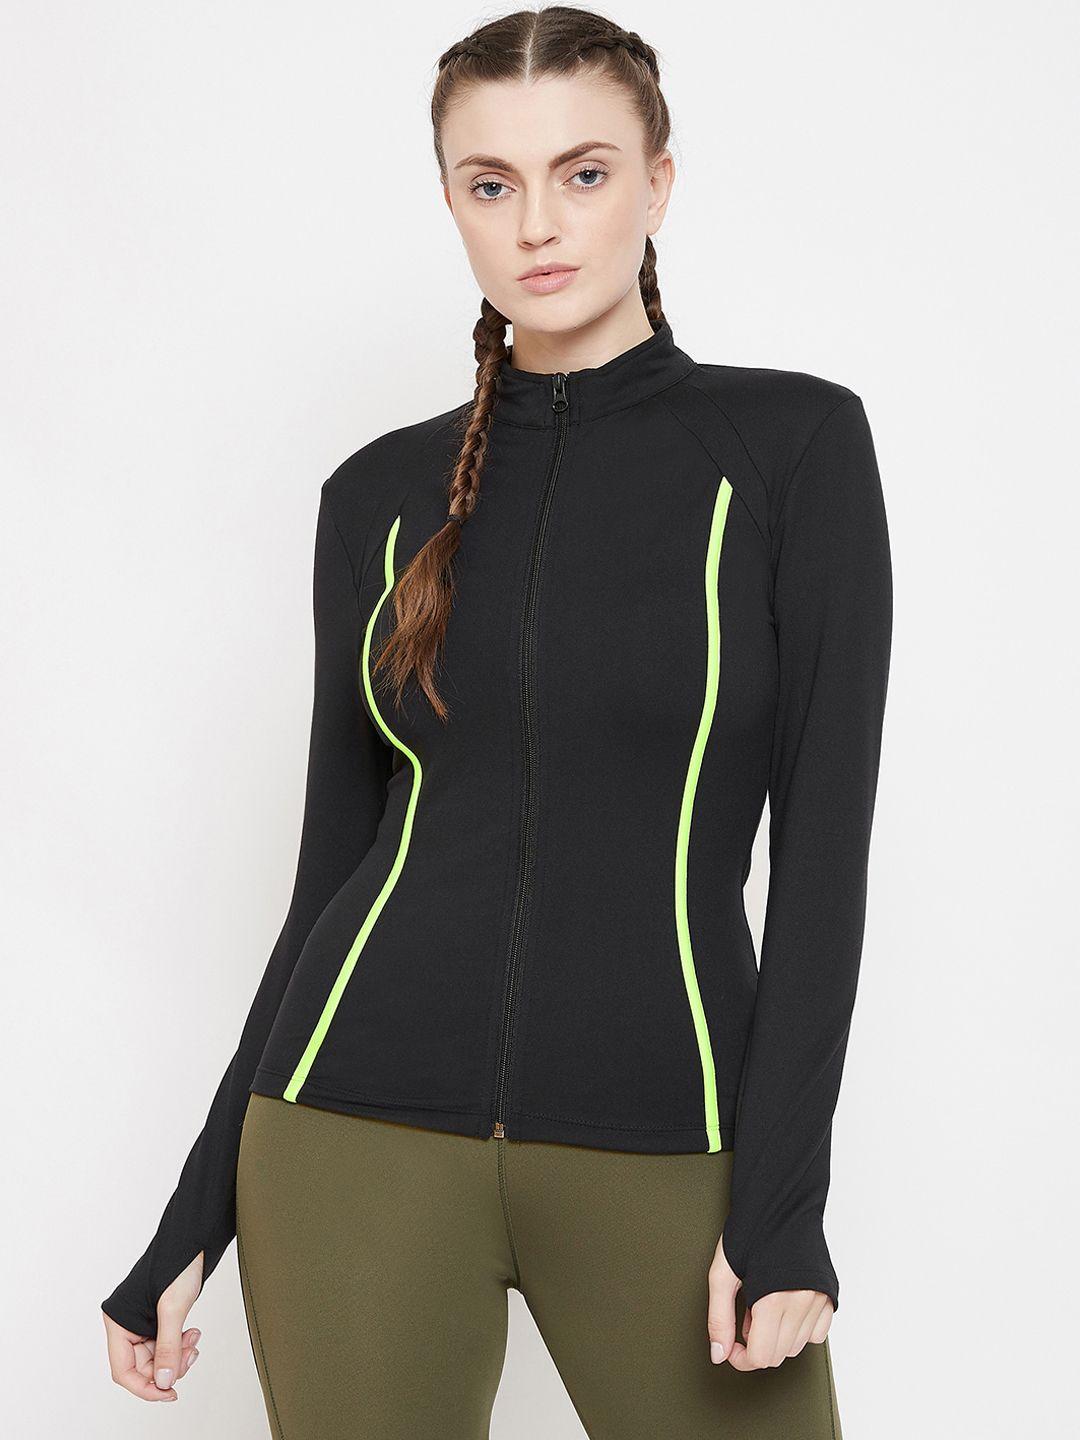 athlisis women black colourblocked lightweight e-dry technology training or gym sporty jacket